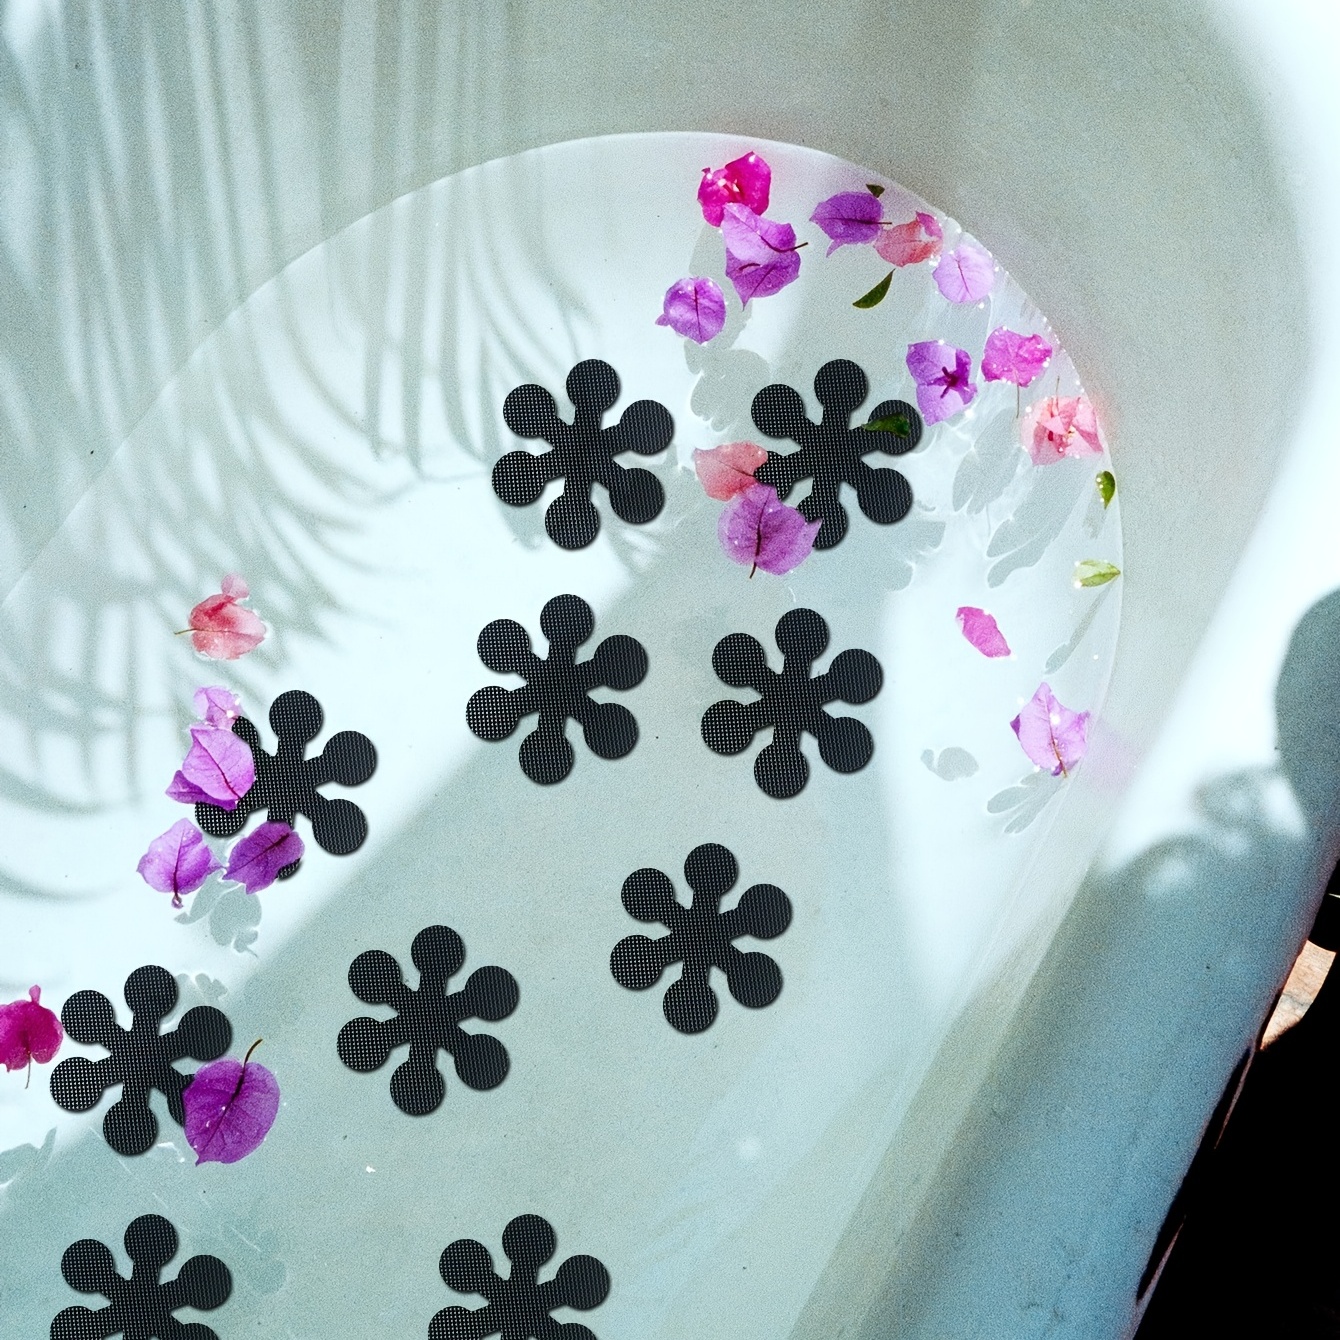  Booluee 20 pegatinas antideslizantes para bañera, diseño de  copos de nieve, con forma de flor, para ducha de seguridad, apliques  adhesivos con raspador para bañera, ducha, piso, escaleras de piscina  (flor) 